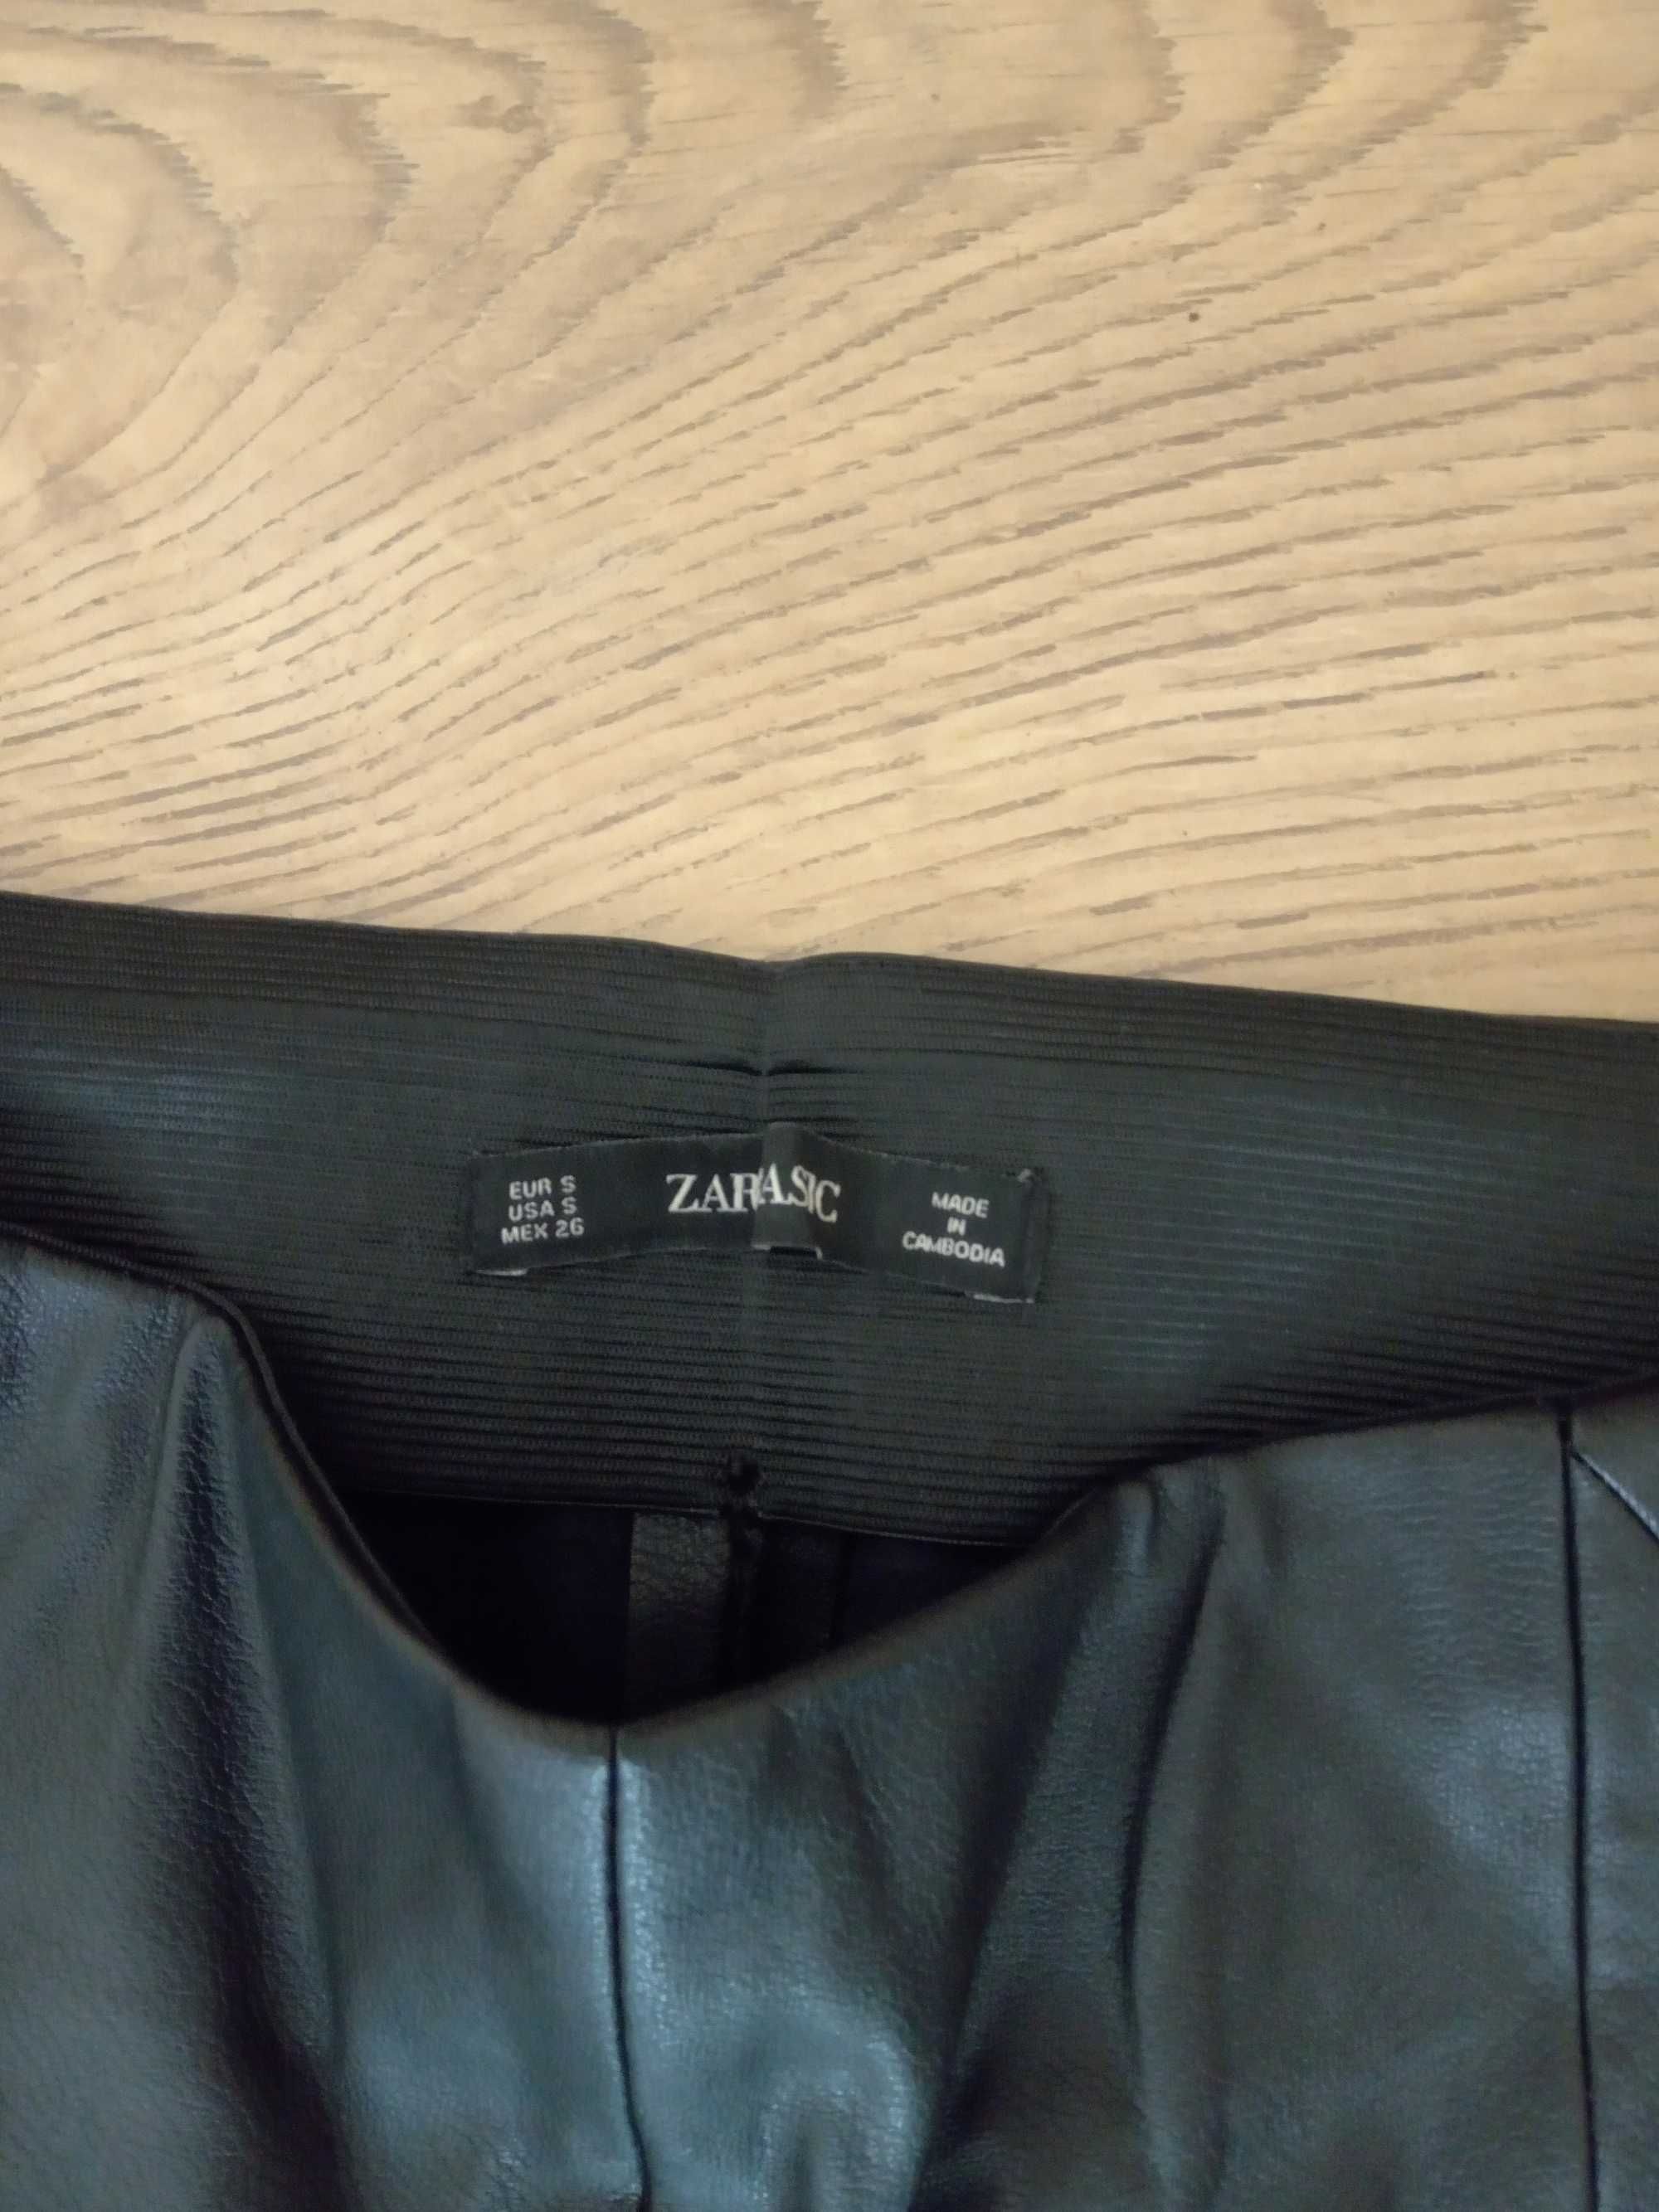 Zara Basic spodnie rurki czarne skóra eko zamki zamek 36